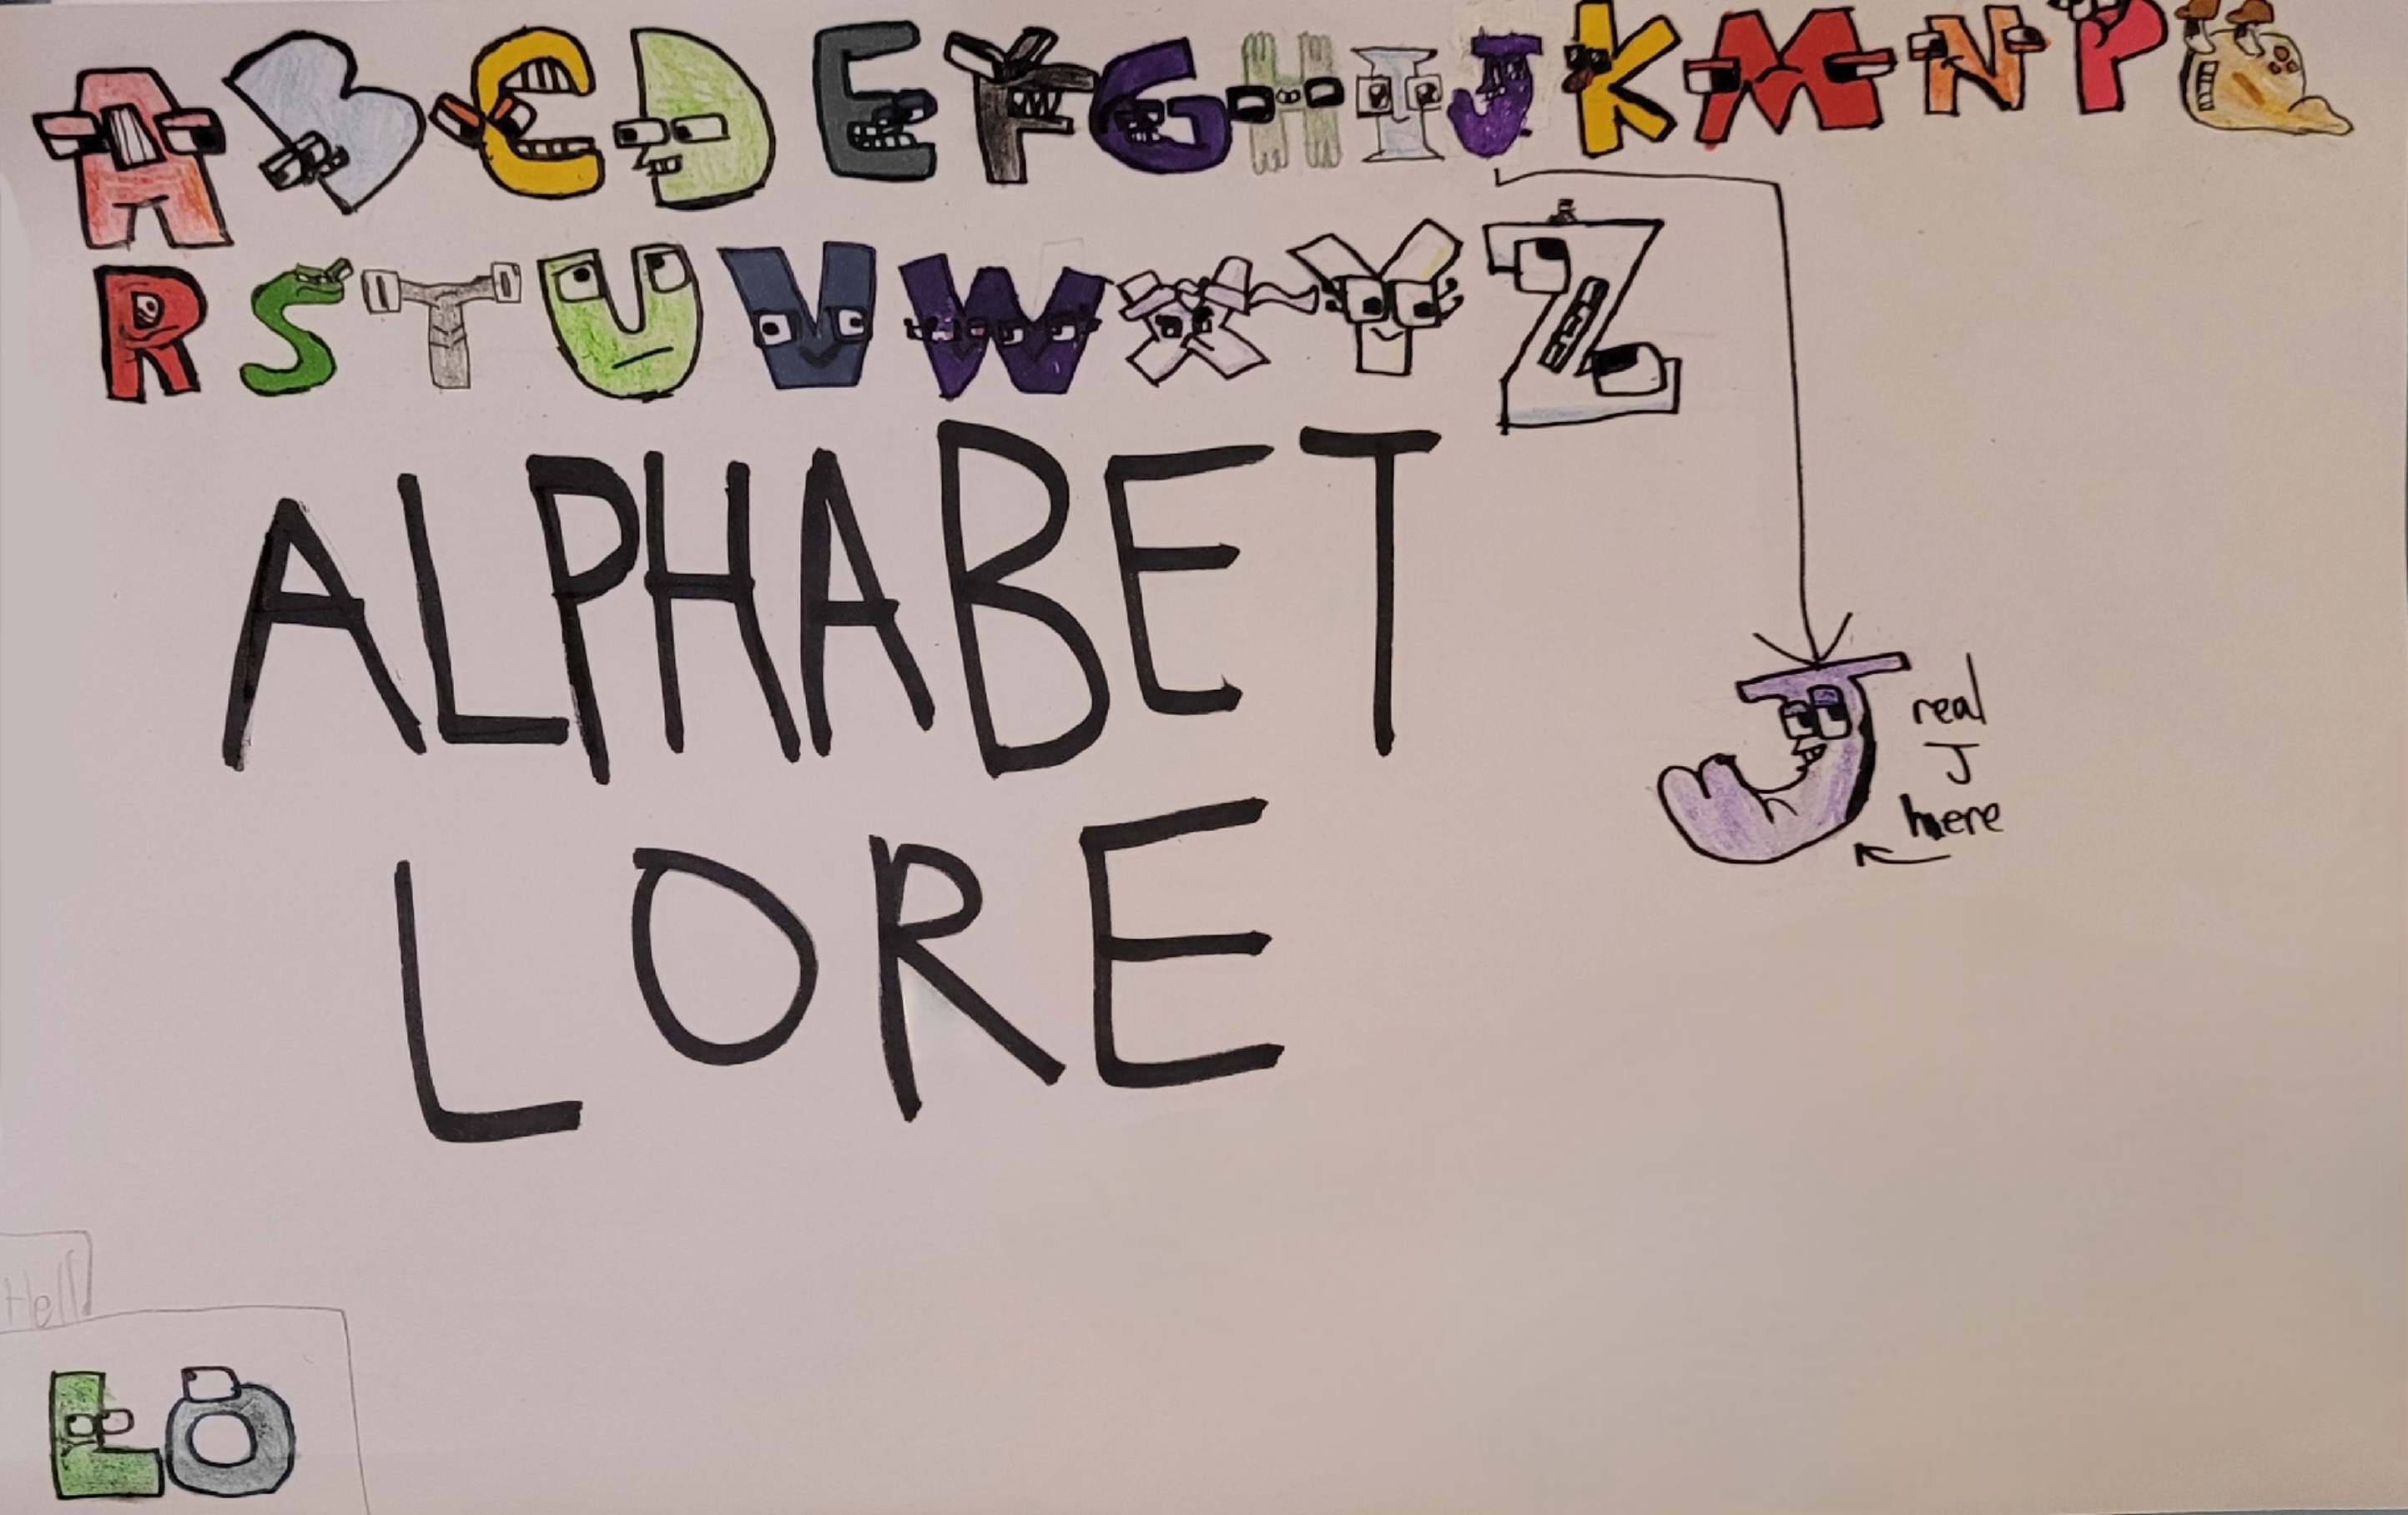 Just a alphabet lore meme by Hoichingchan on DeviantArt